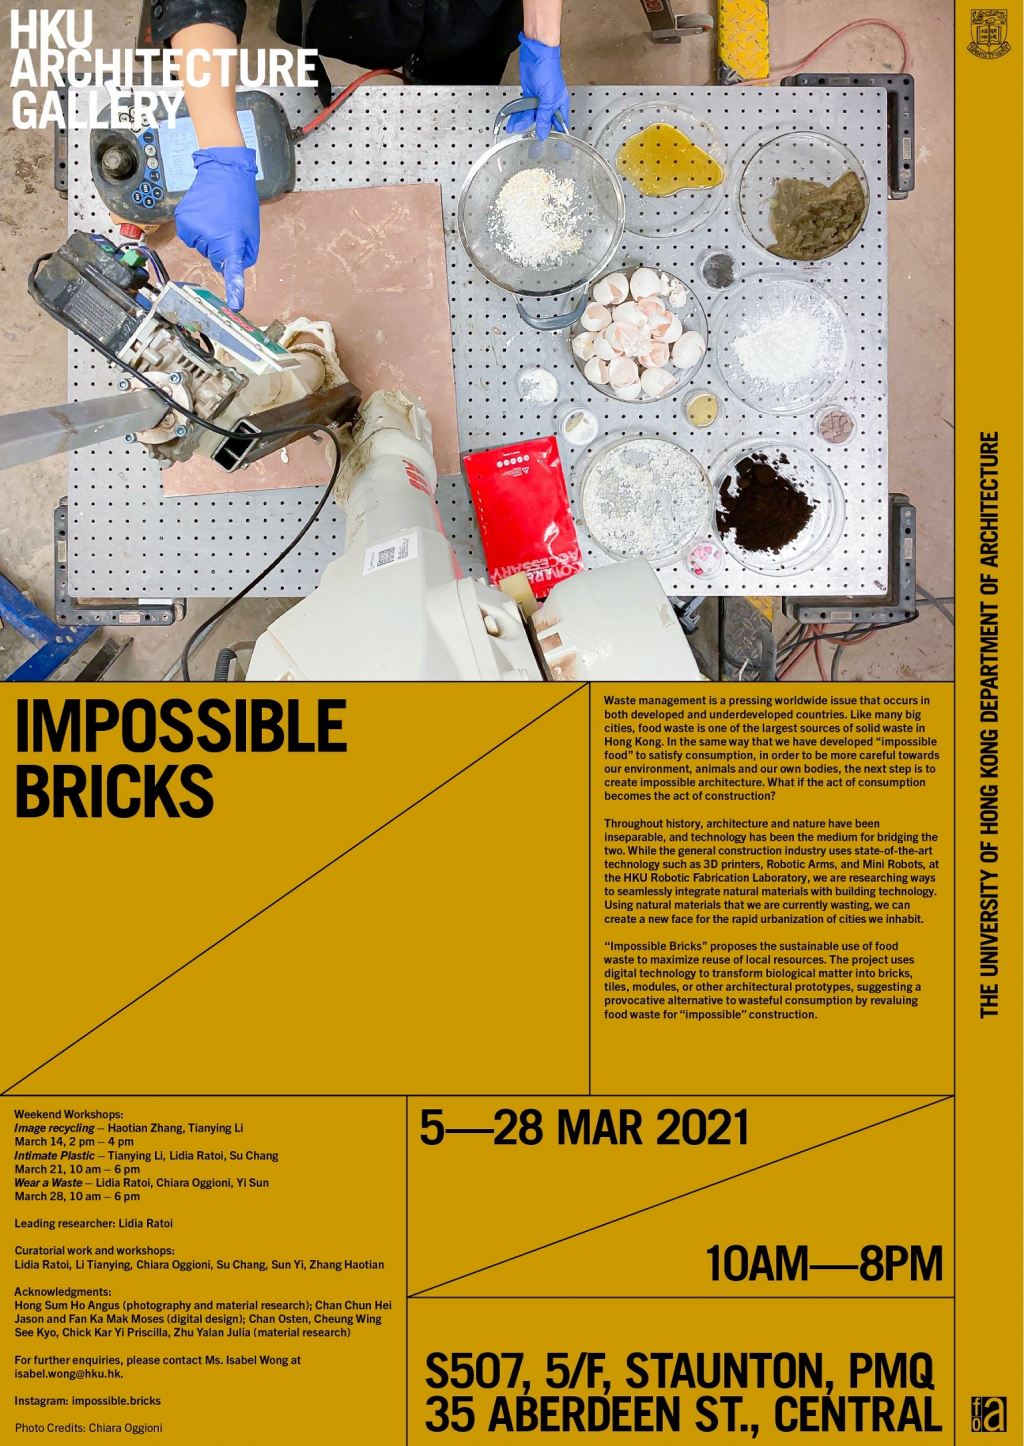 HKU Department of Architecture - “IMPOSSIBLE BRICKS” EXHIBITION @ PMQ